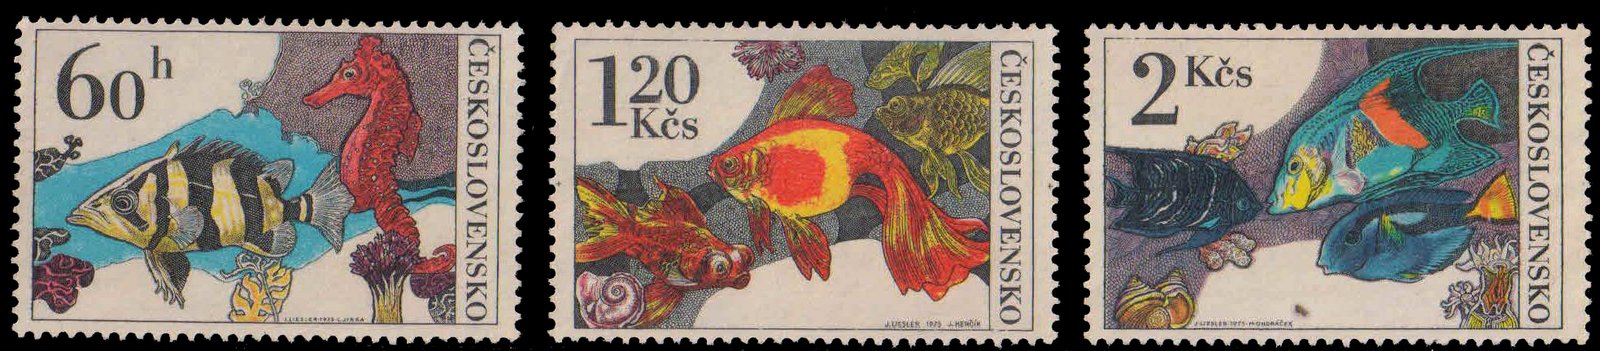 CZECHOSLOVAKIA 1975-Aquarium Fish, Set of 3, Mitn Gum Wash, S.G. 2222-24, 26